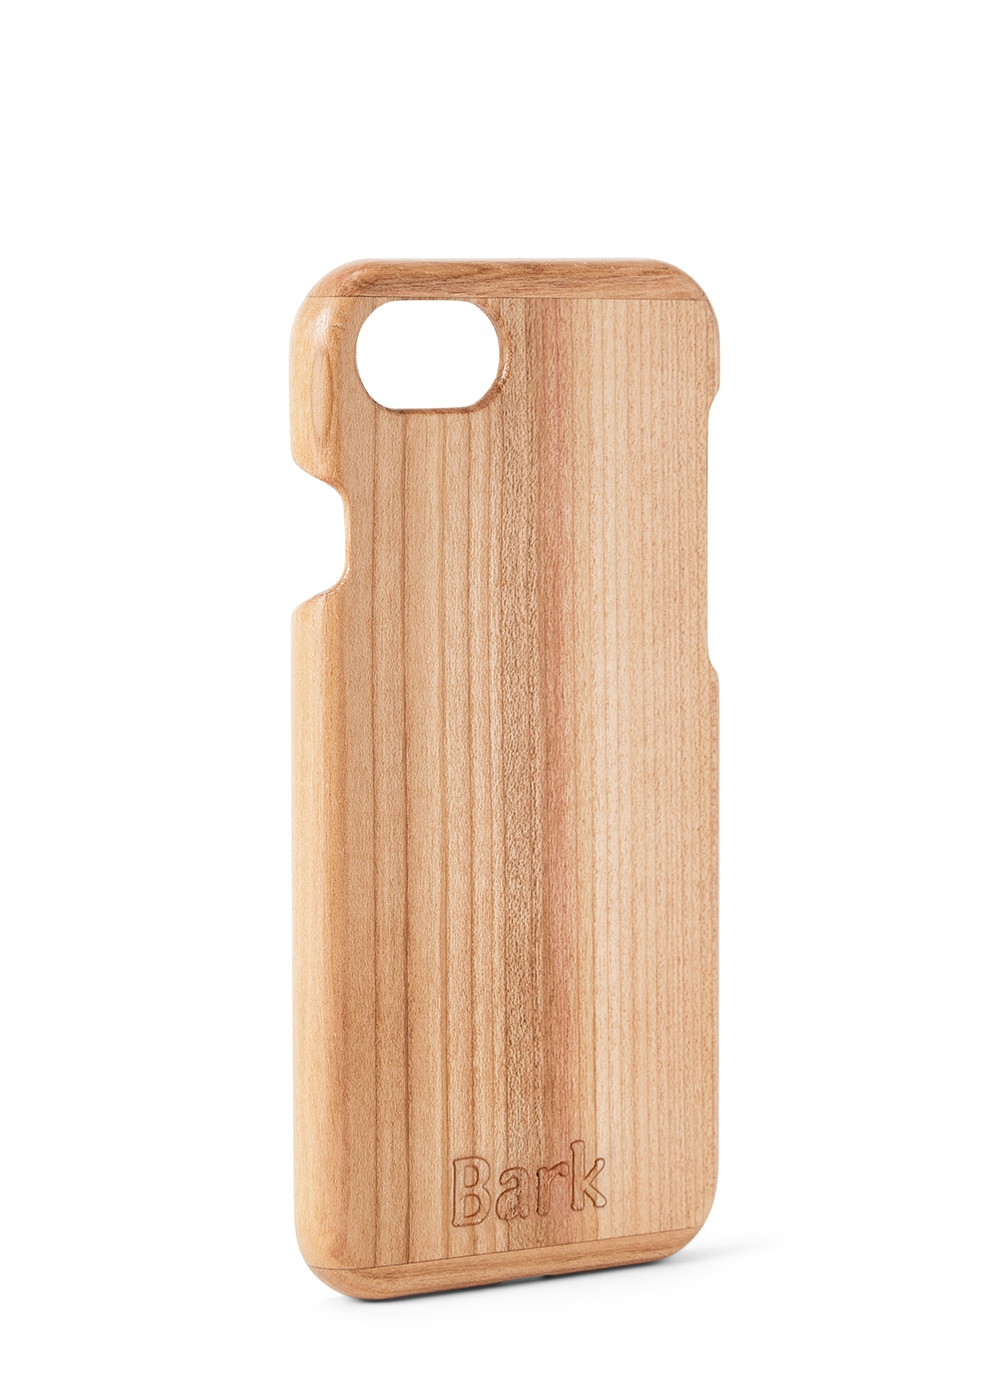 iPhone 8 custodia in legno di latifoglia svedese - Körsbär